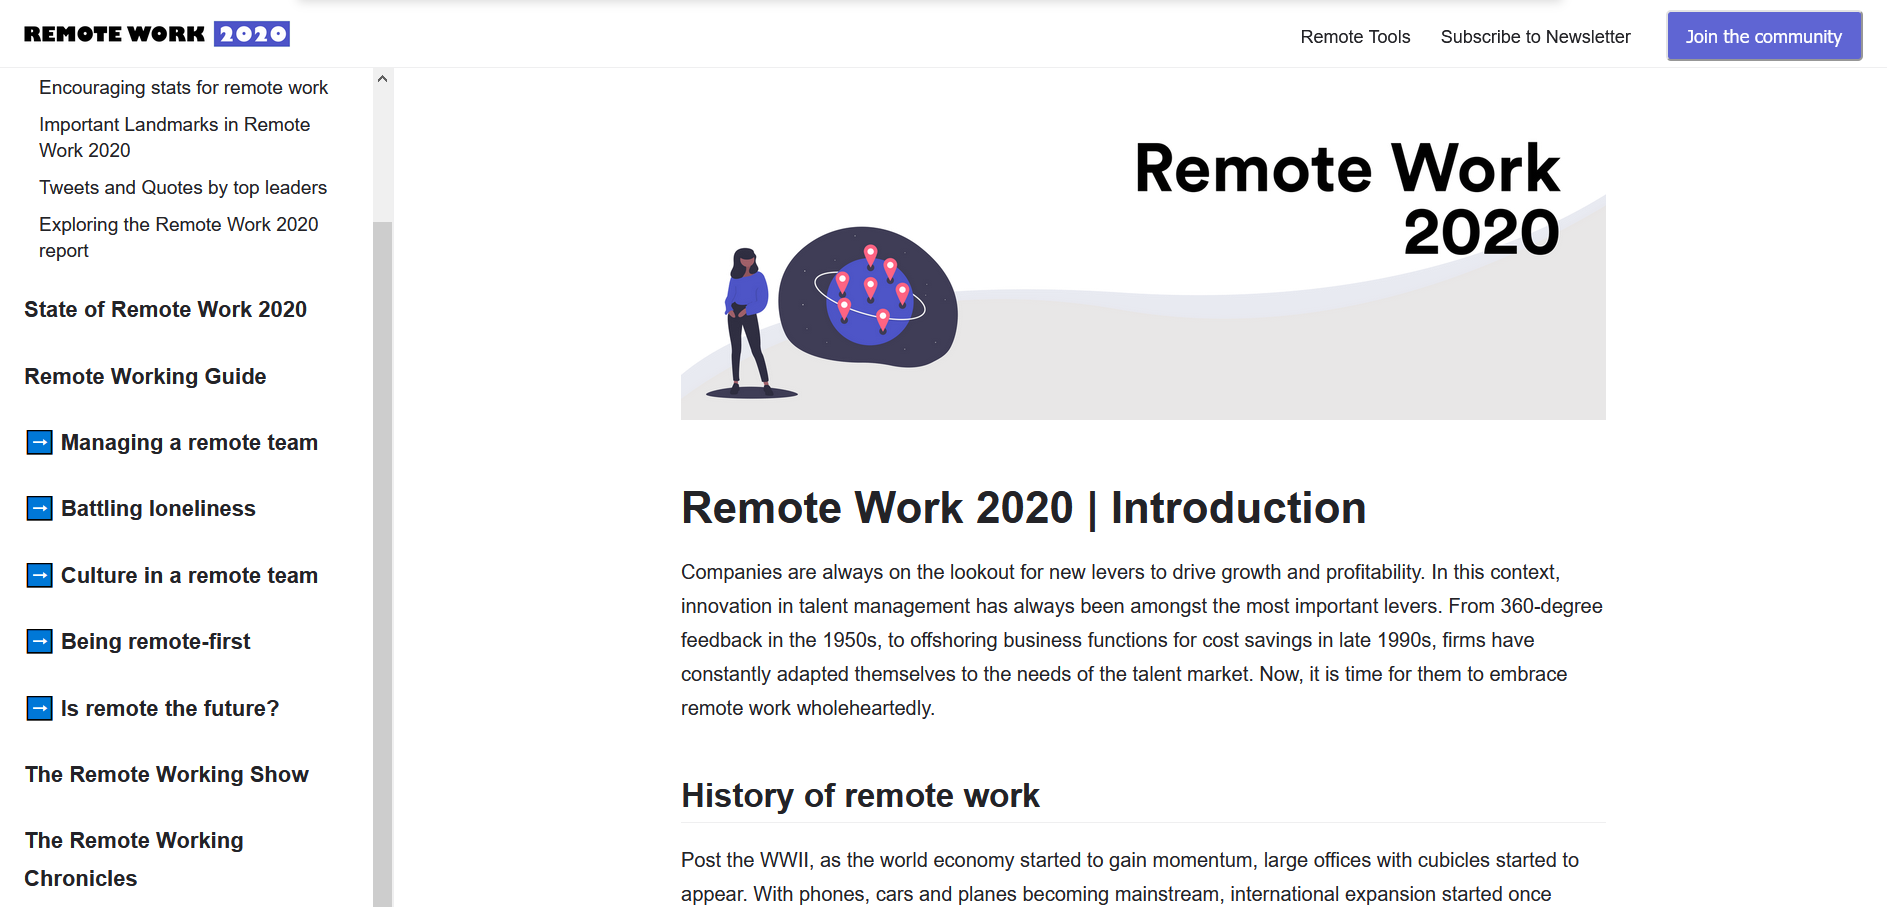 Find detailed information about Remote Work 2020